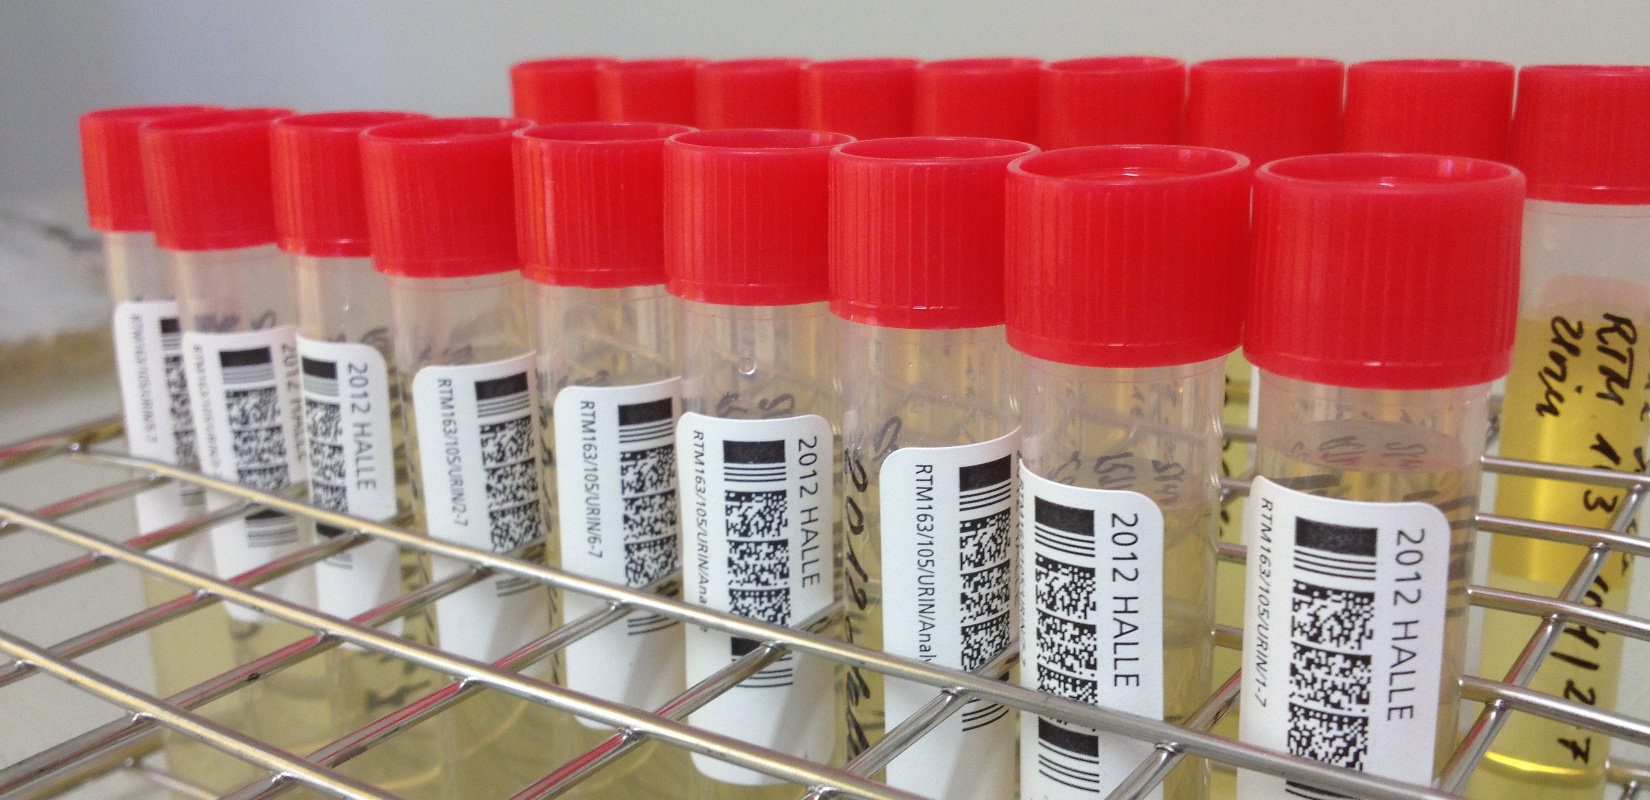 24h-sampling urine samples